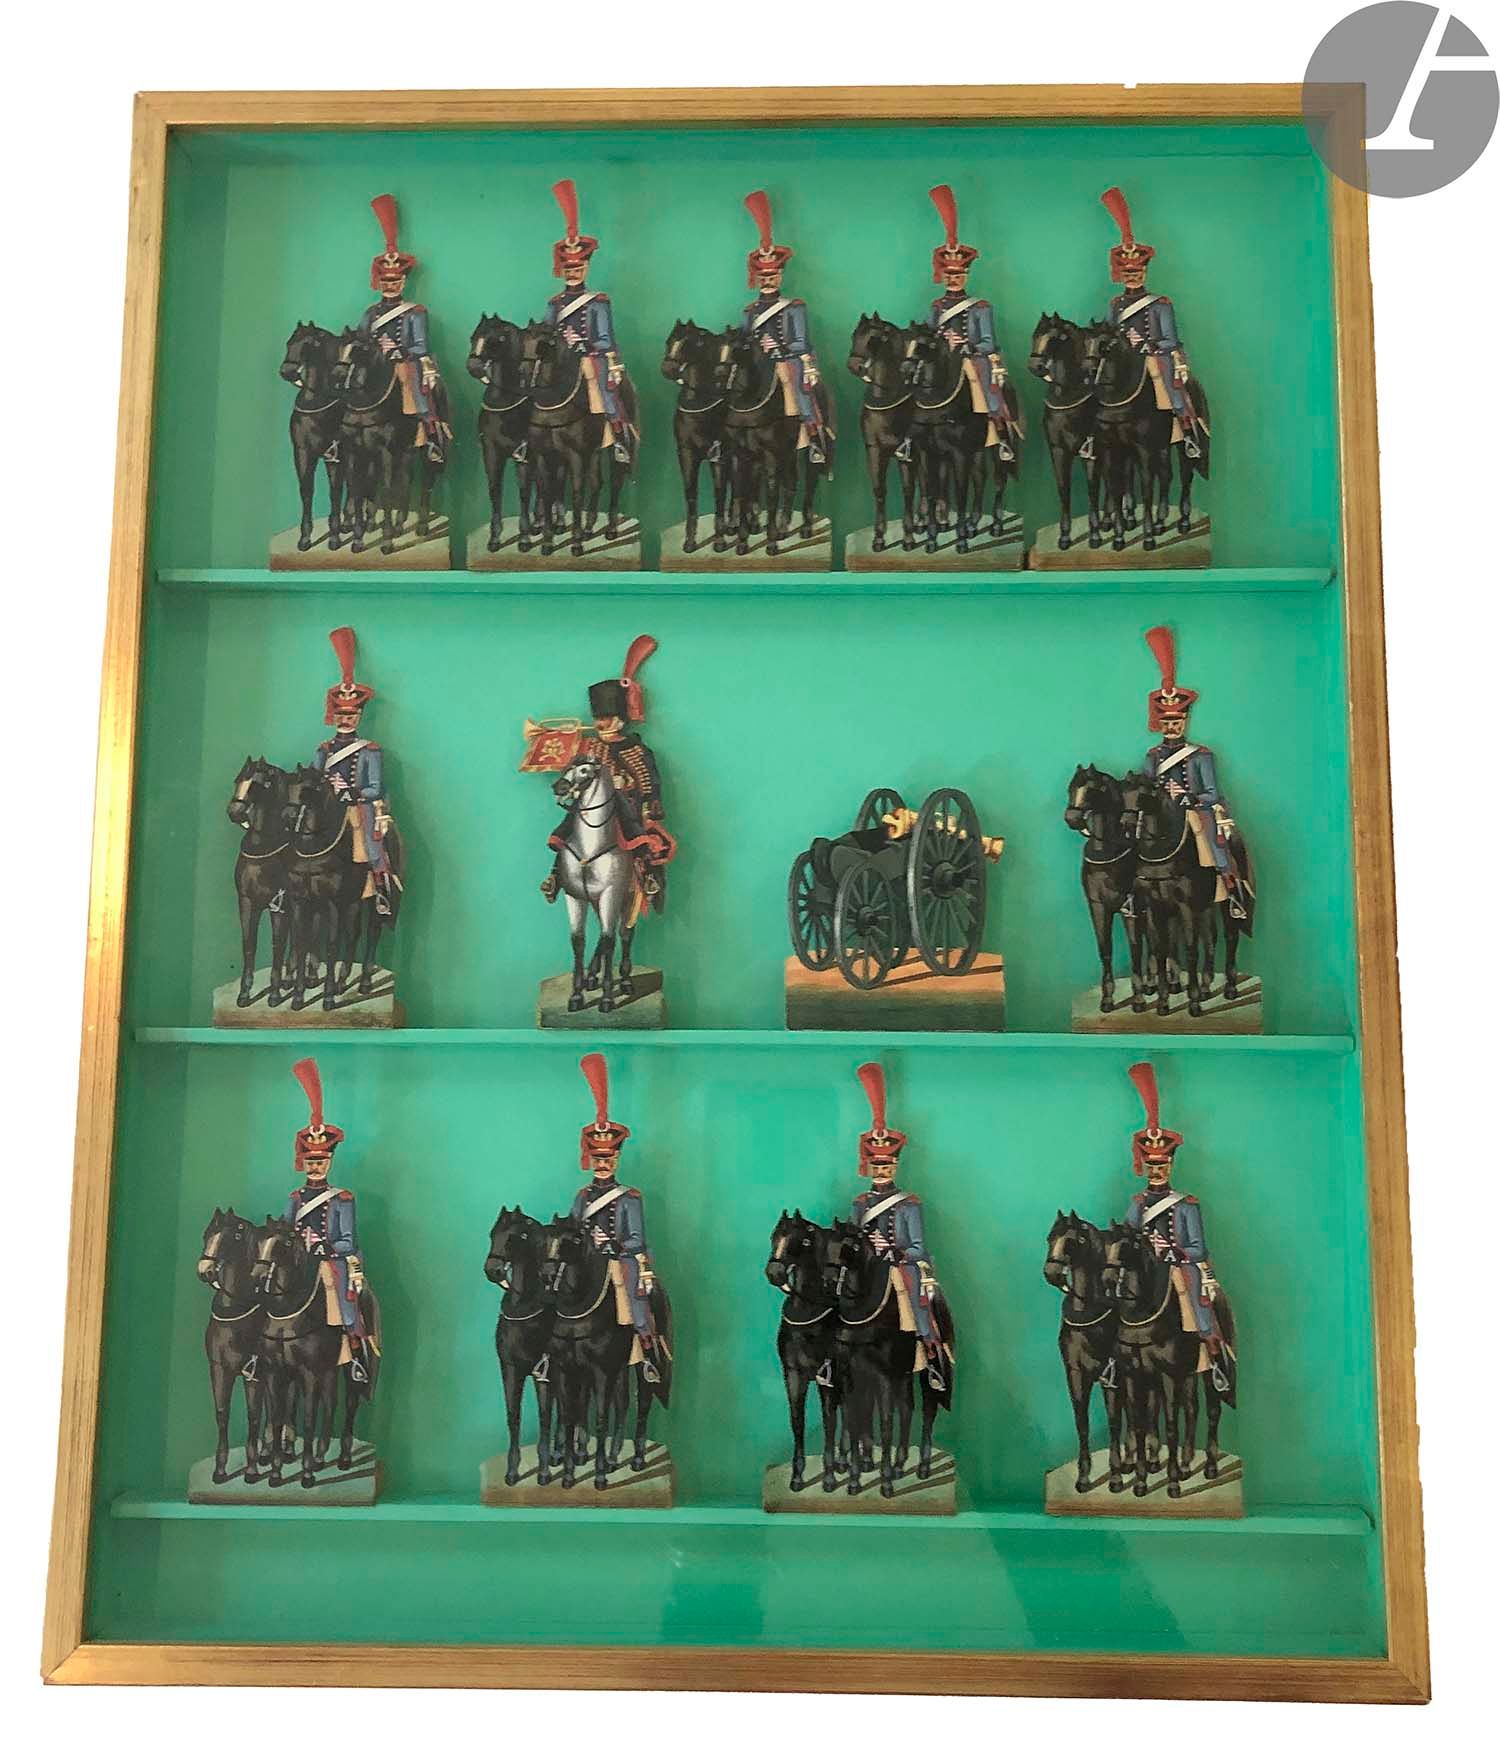 Null 斯特拉斯堡士兵小组，由
13名斯特拉斯堡士兵组成，代表近卫军的炮兵部队（第一帝国）
。
 
45 x 35 cm
玻璃下的框架。
B.E.